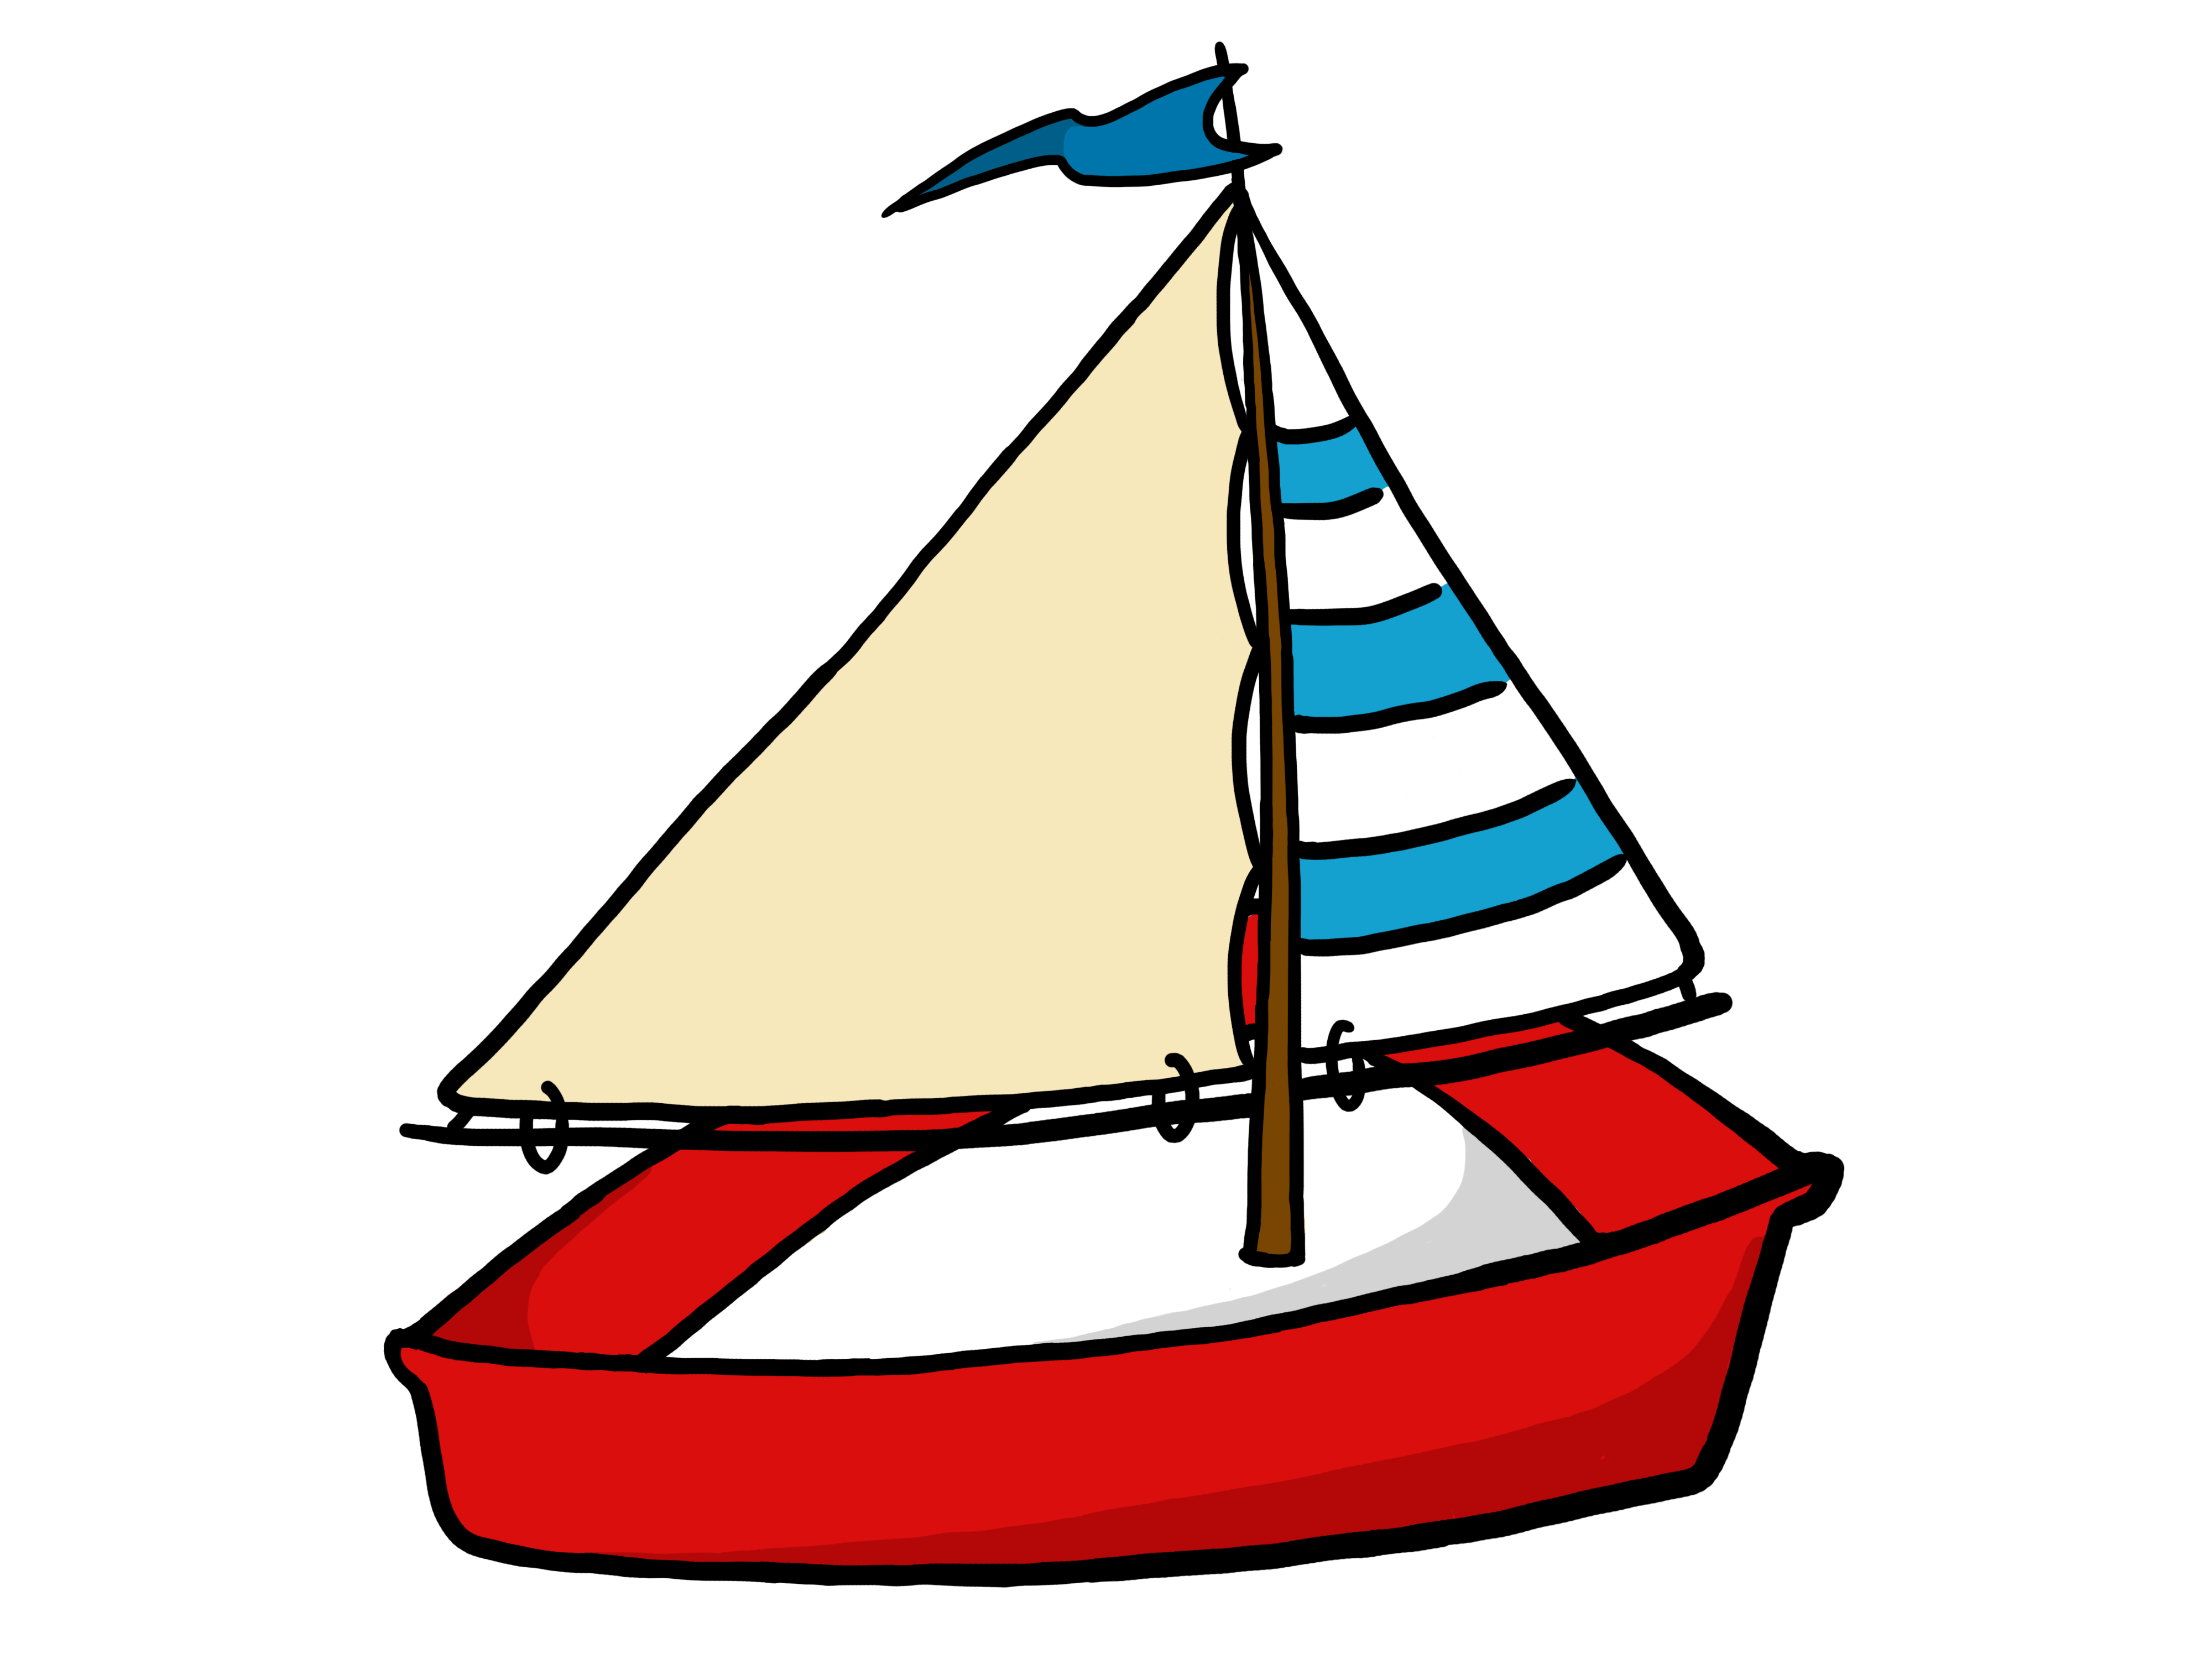 Small boat clipart